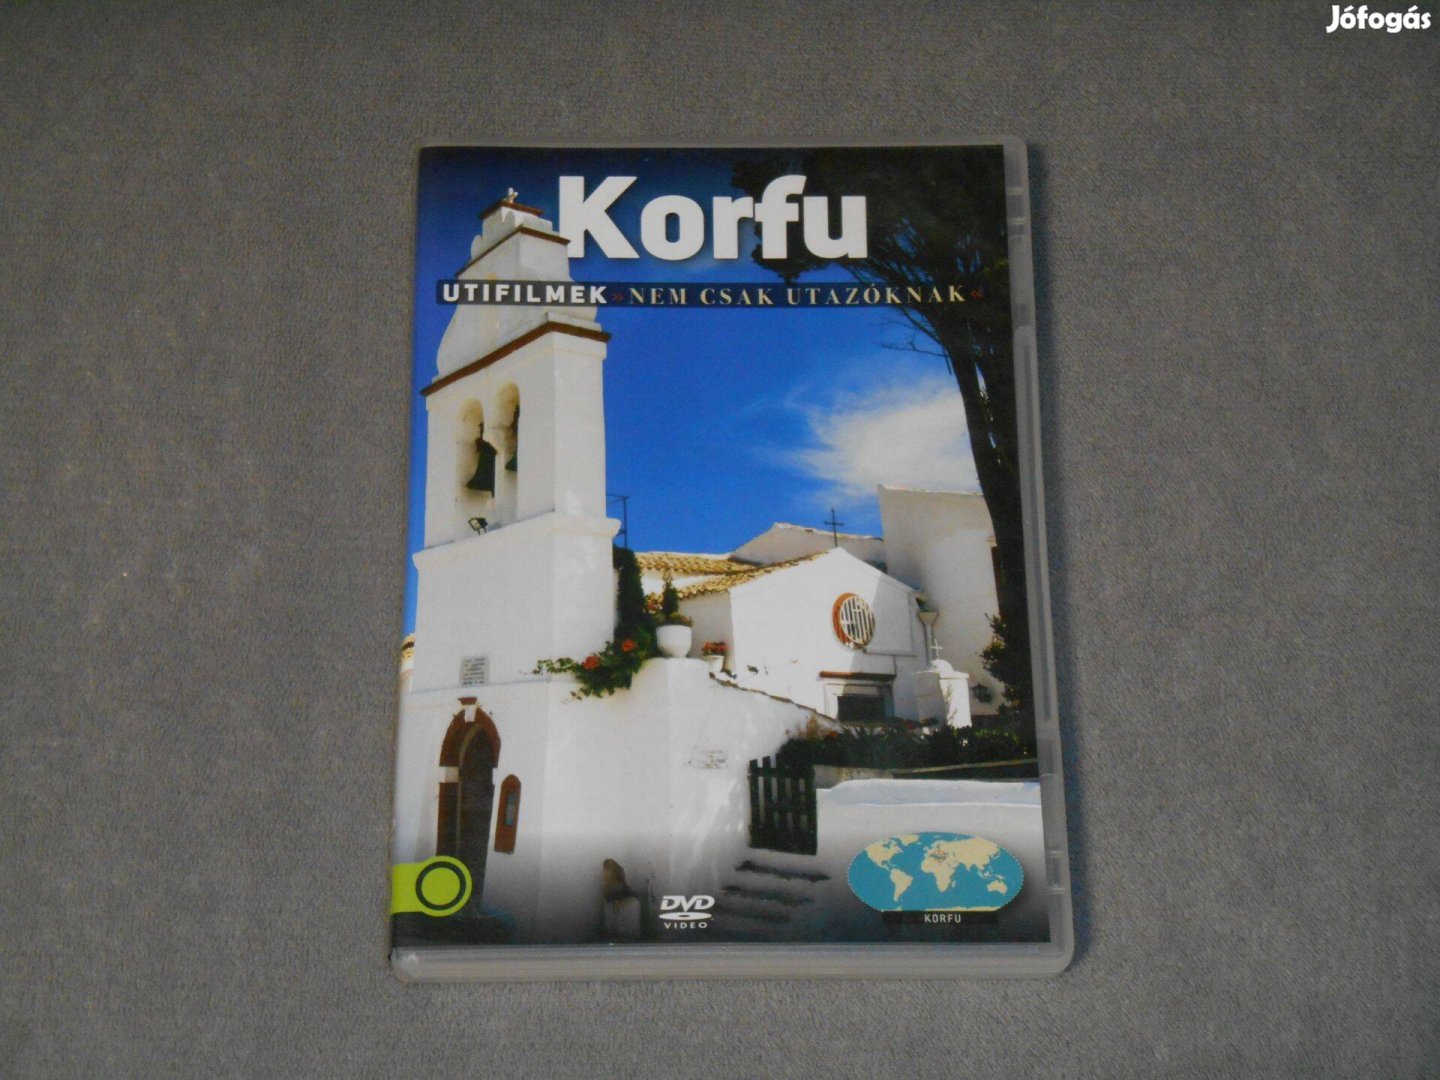 Korfu - Utifilmek nem csak utazóknak DVD film utifilm